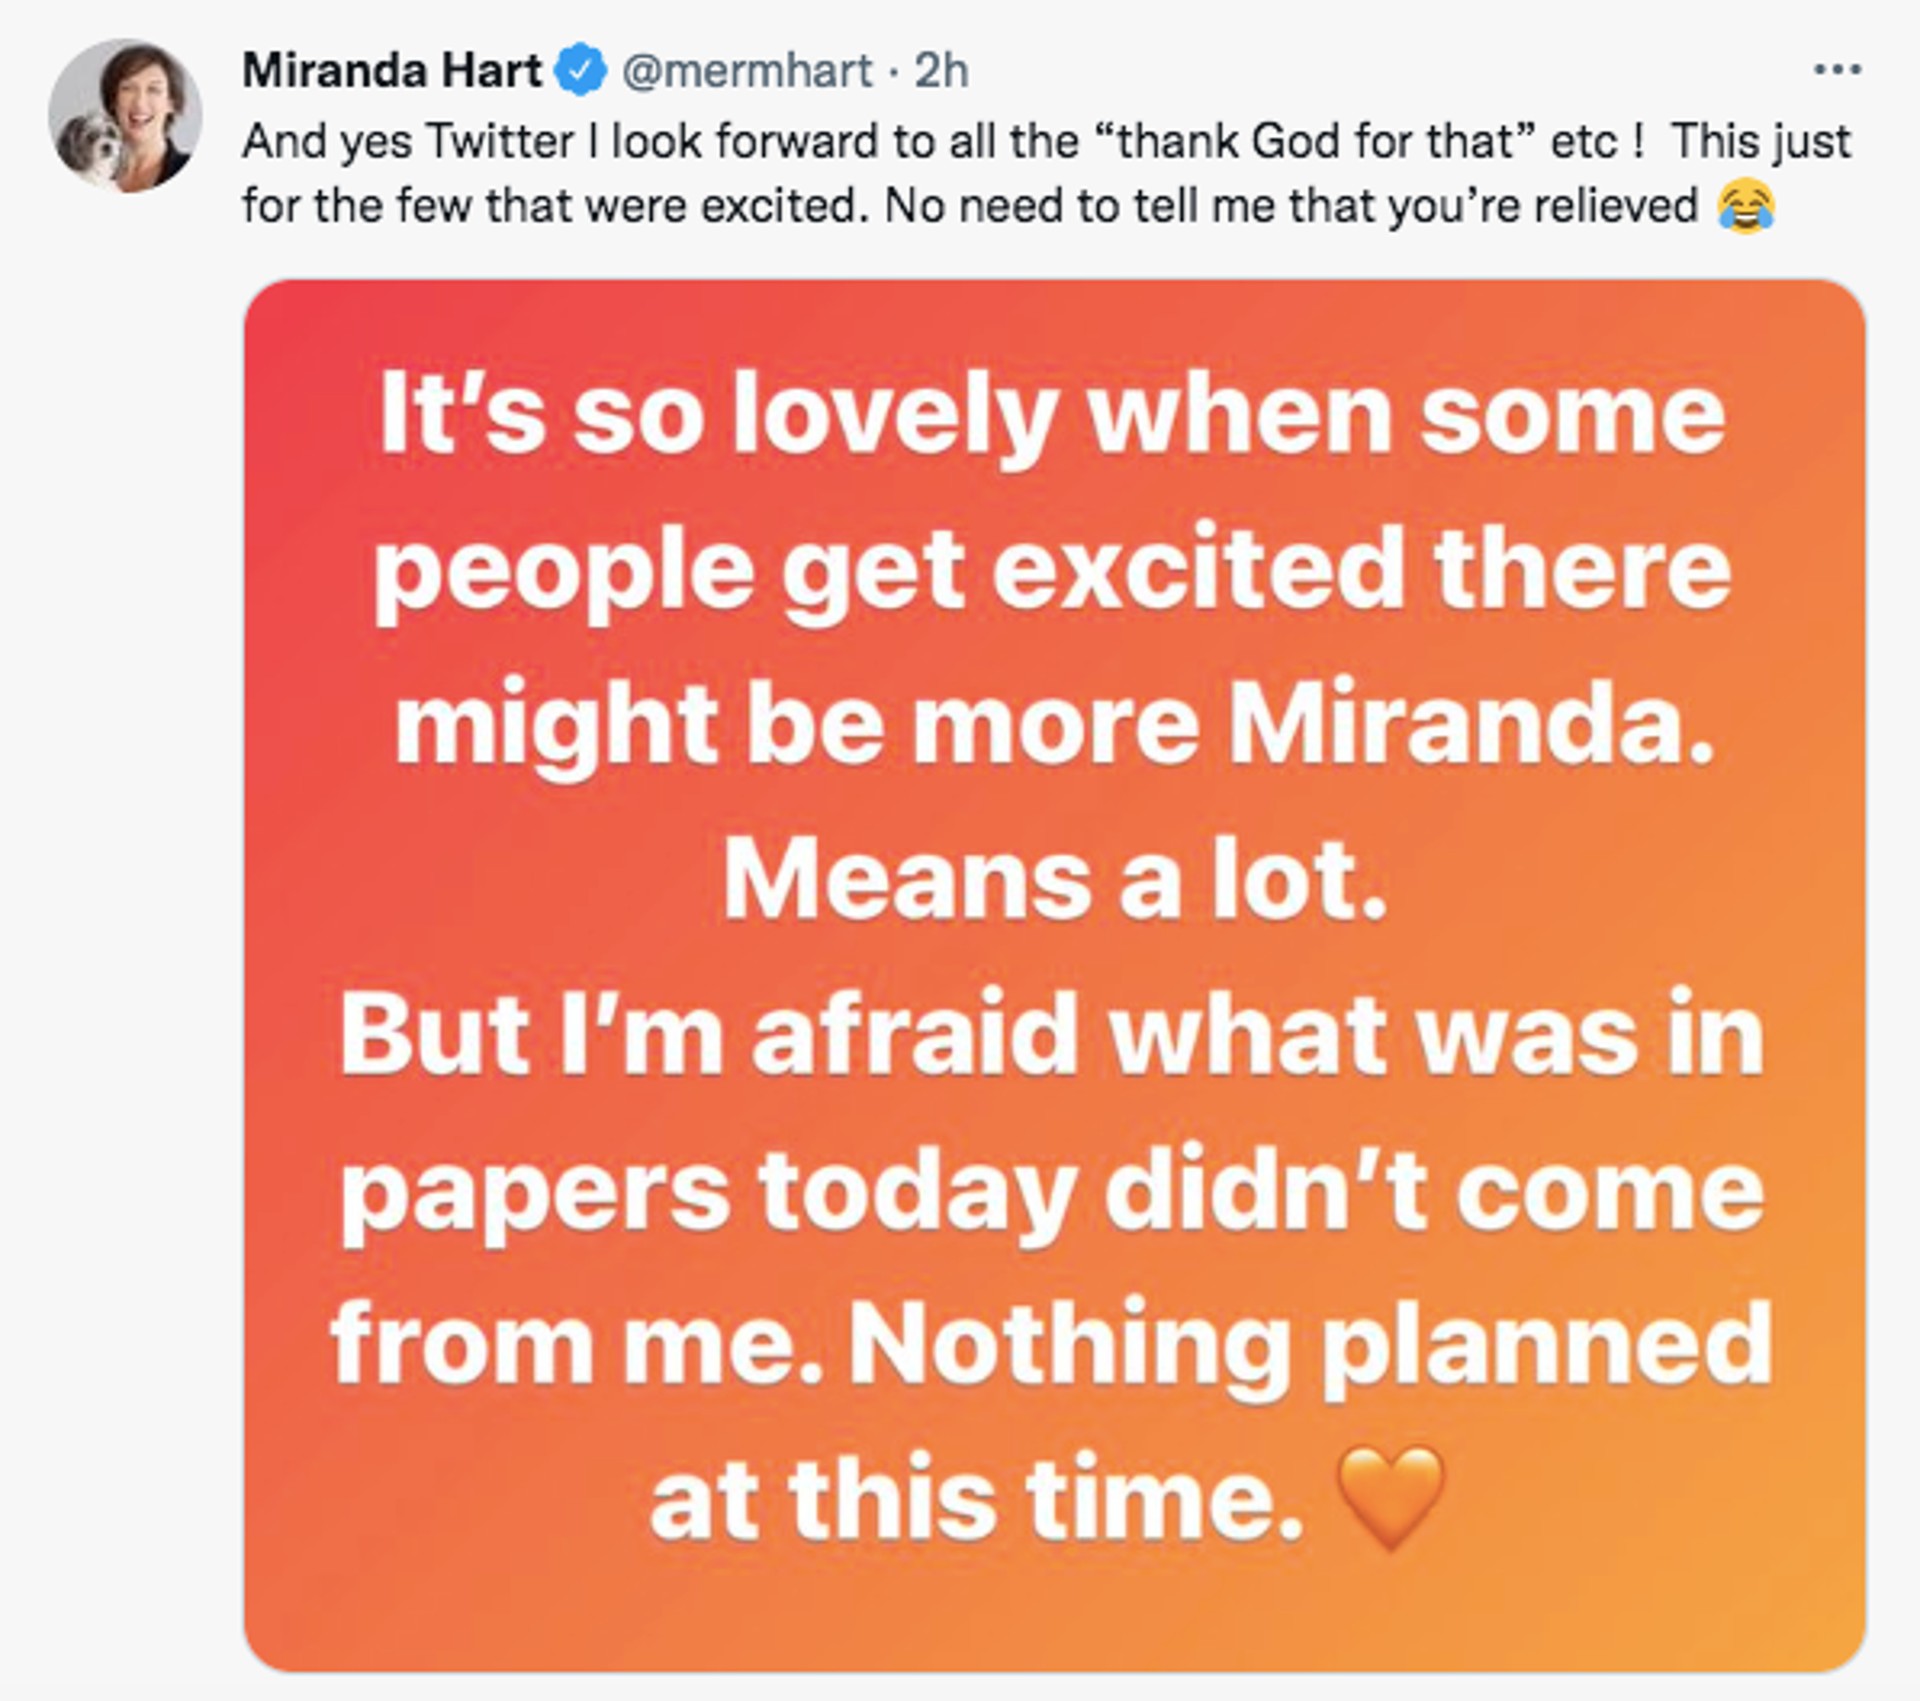 Miranda Hart's tweet about 'Miranda'